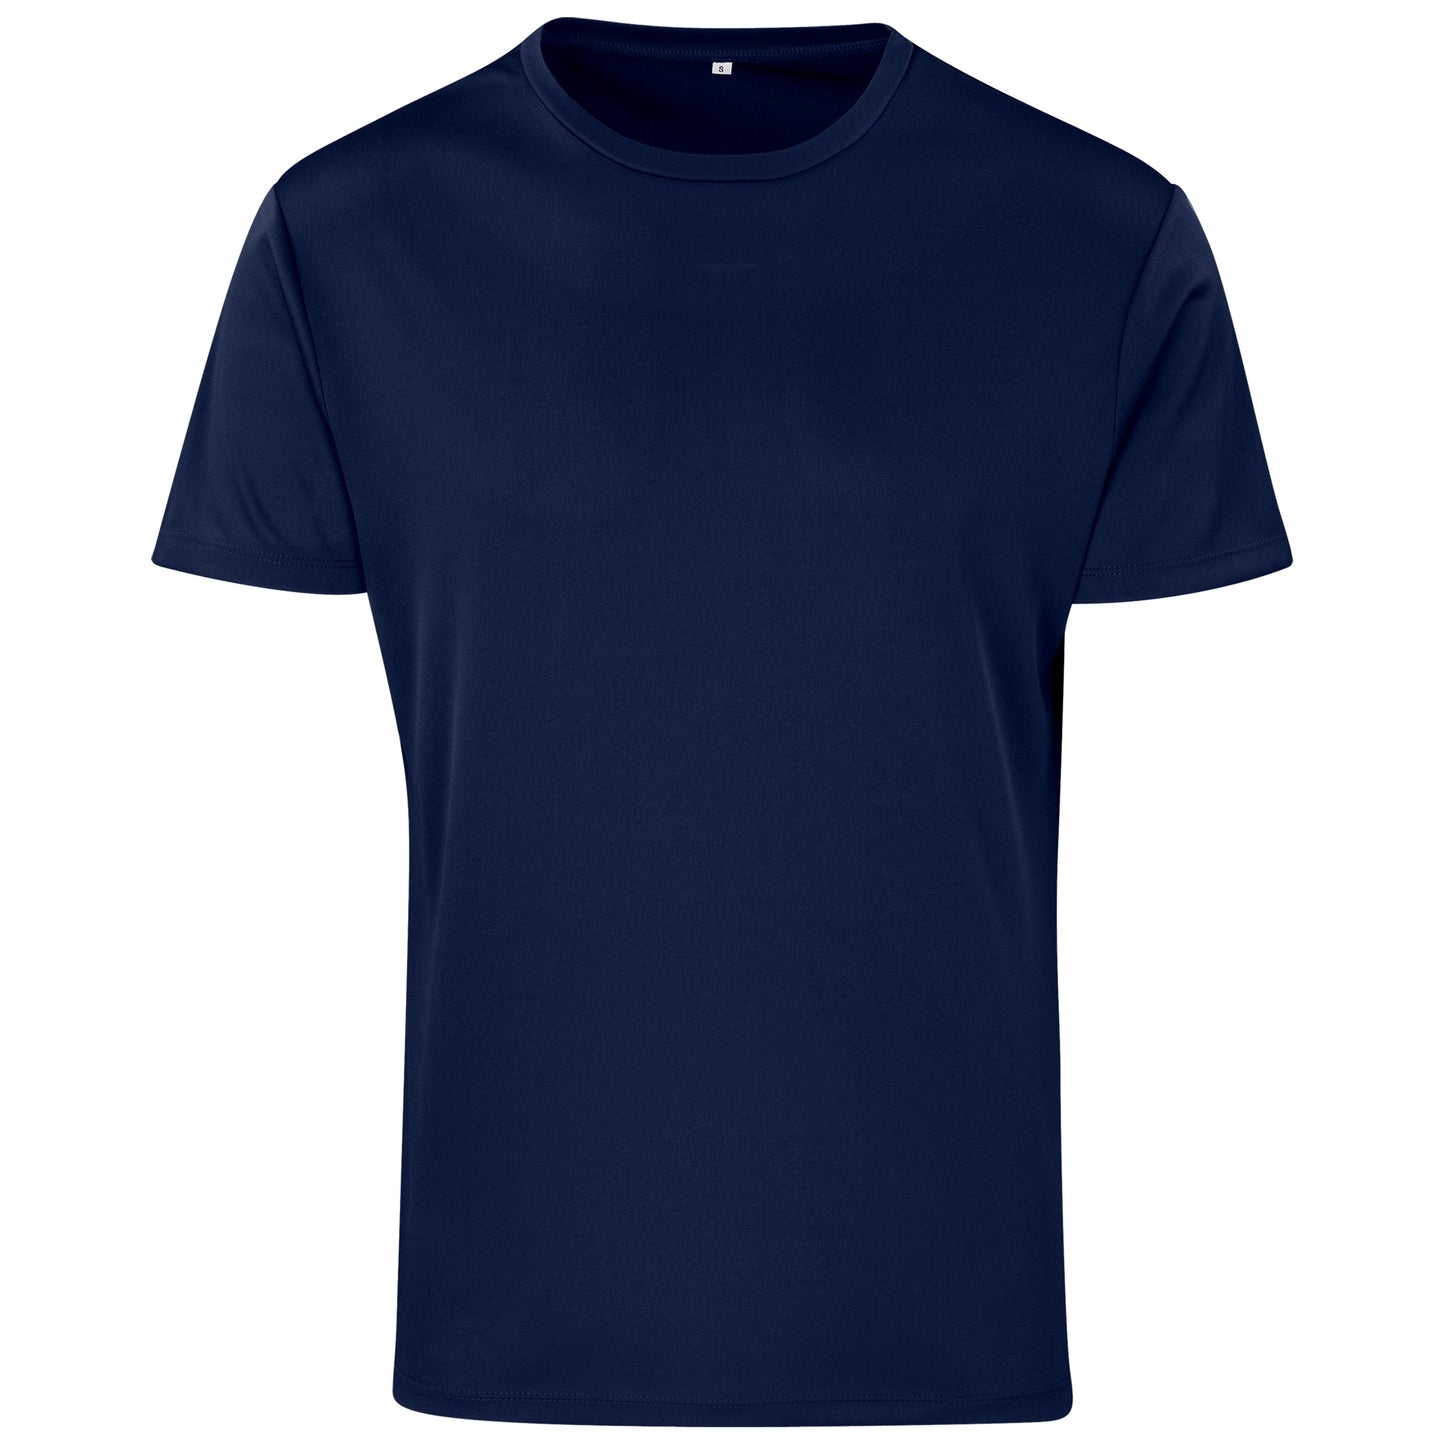 Unisex Activ T-shirt (TS-AL-59-A)